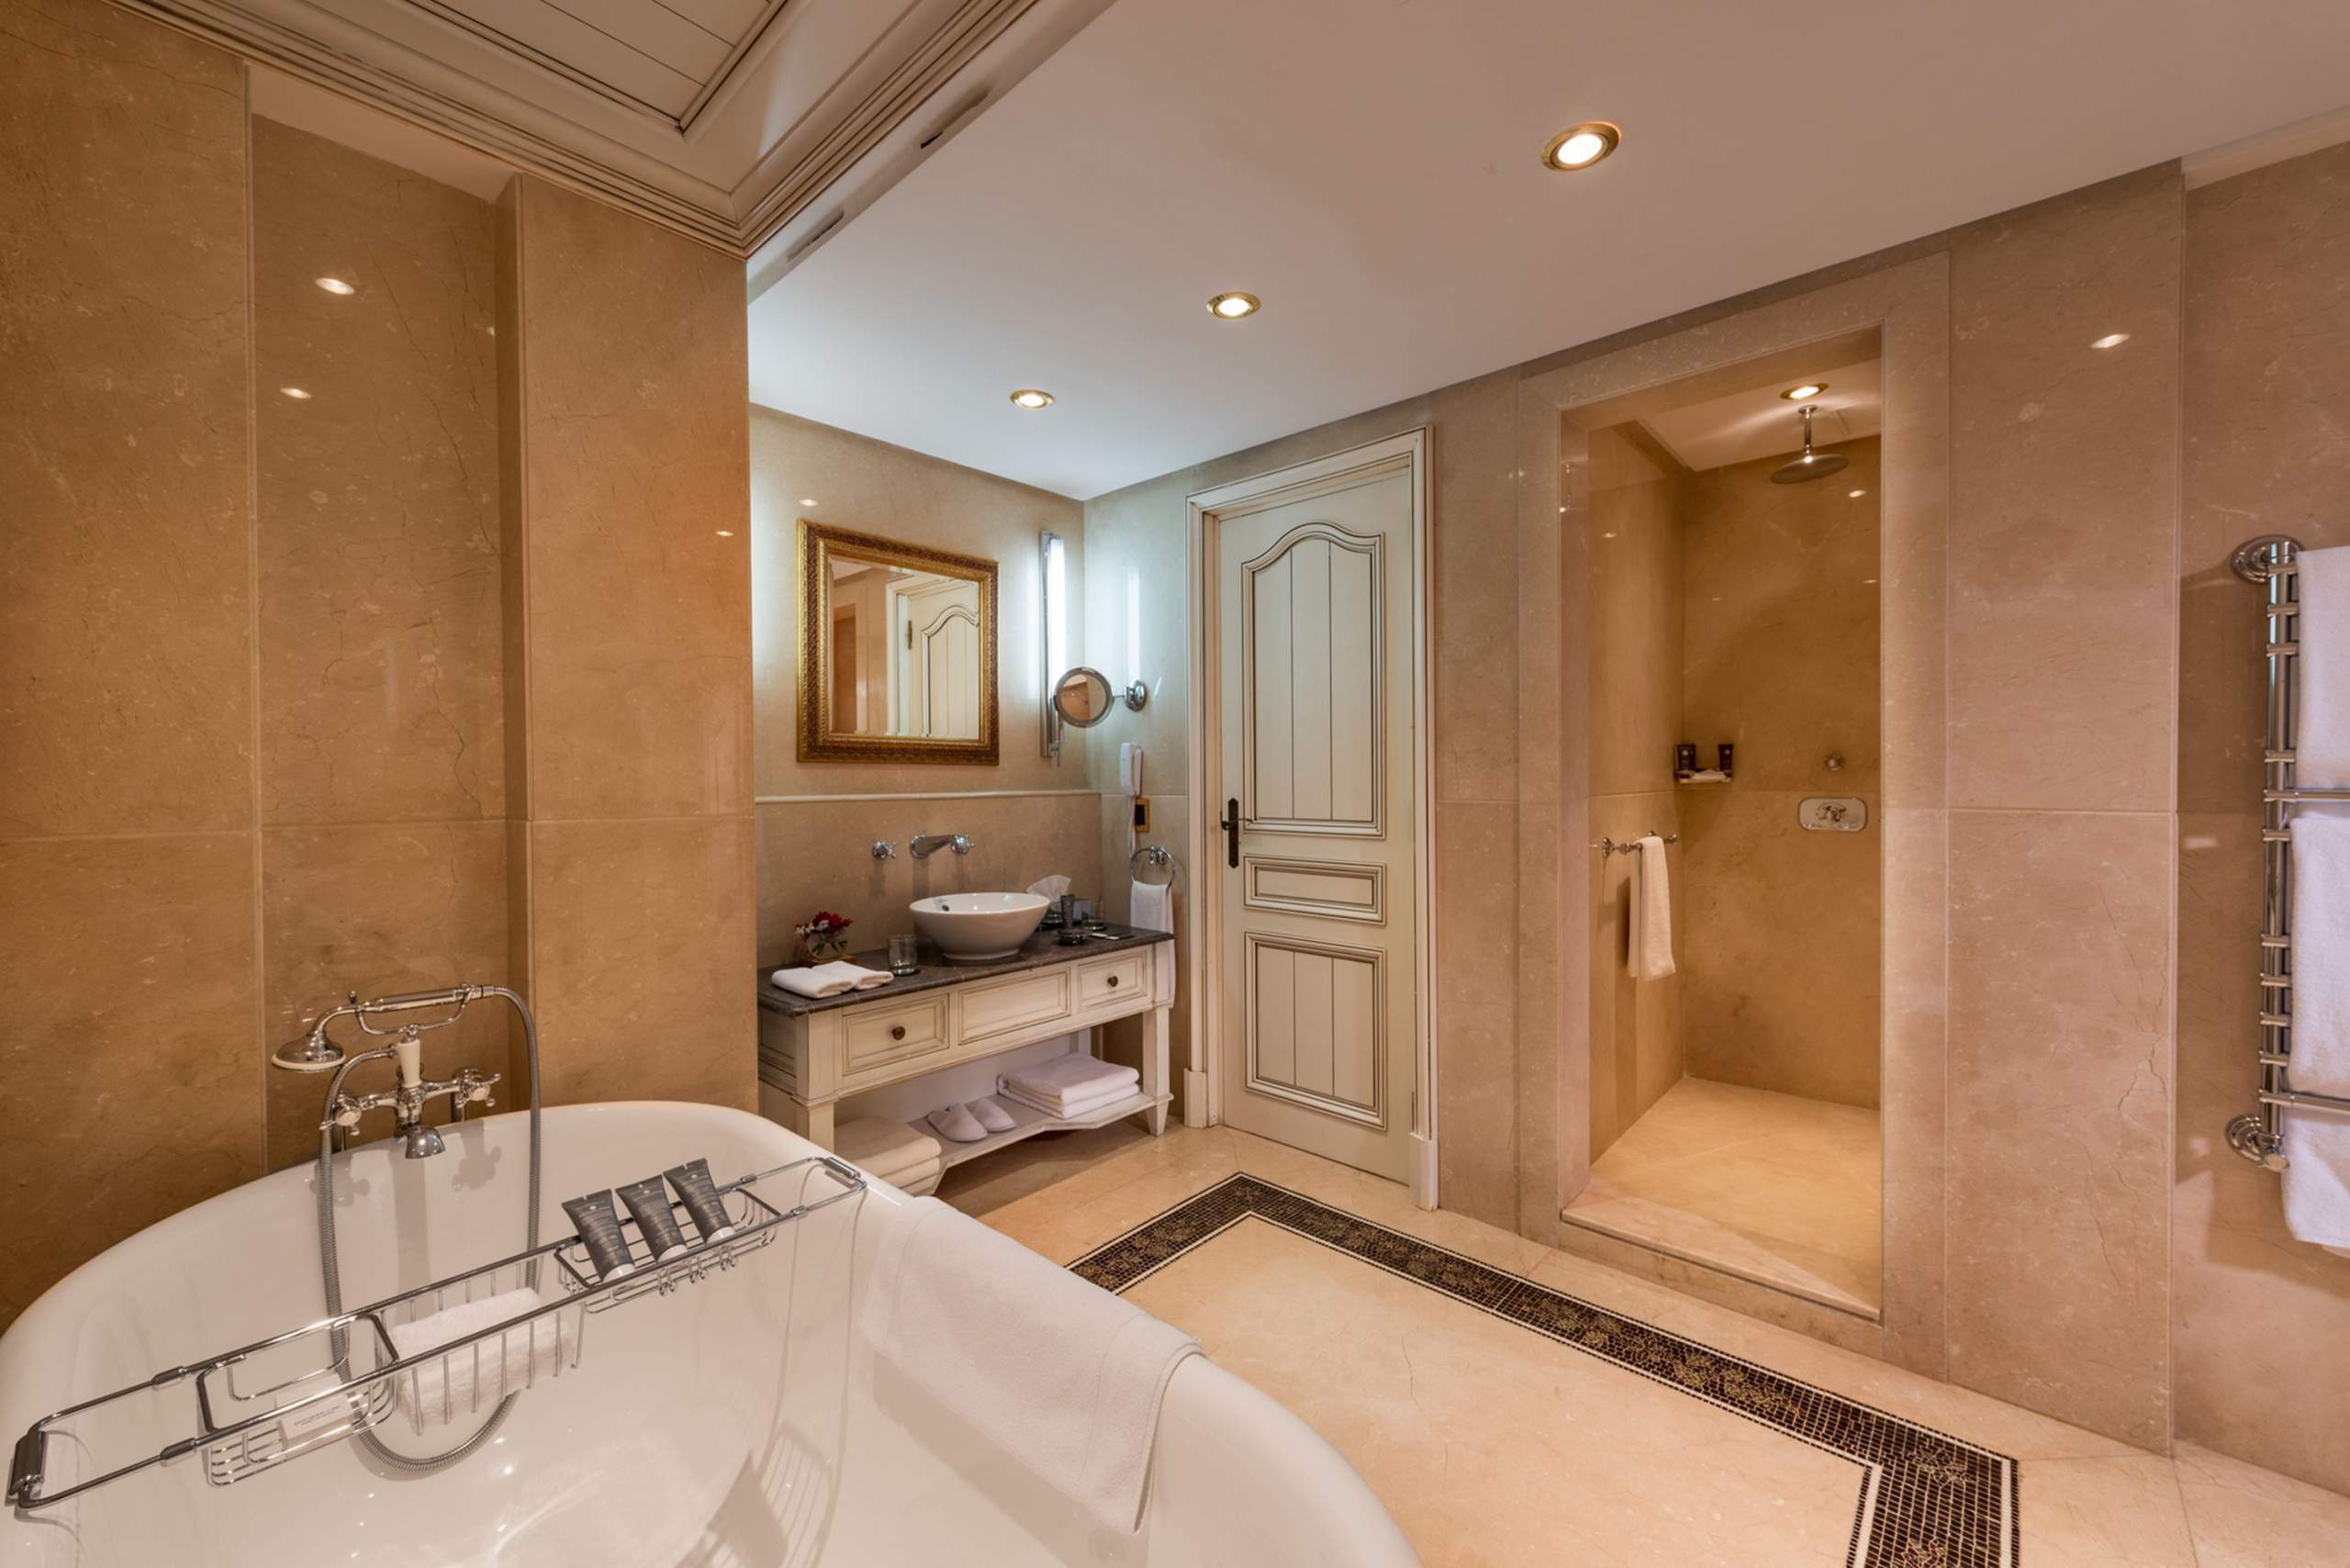 Salle de bain Hôtel de luxe Maroc<br />
 